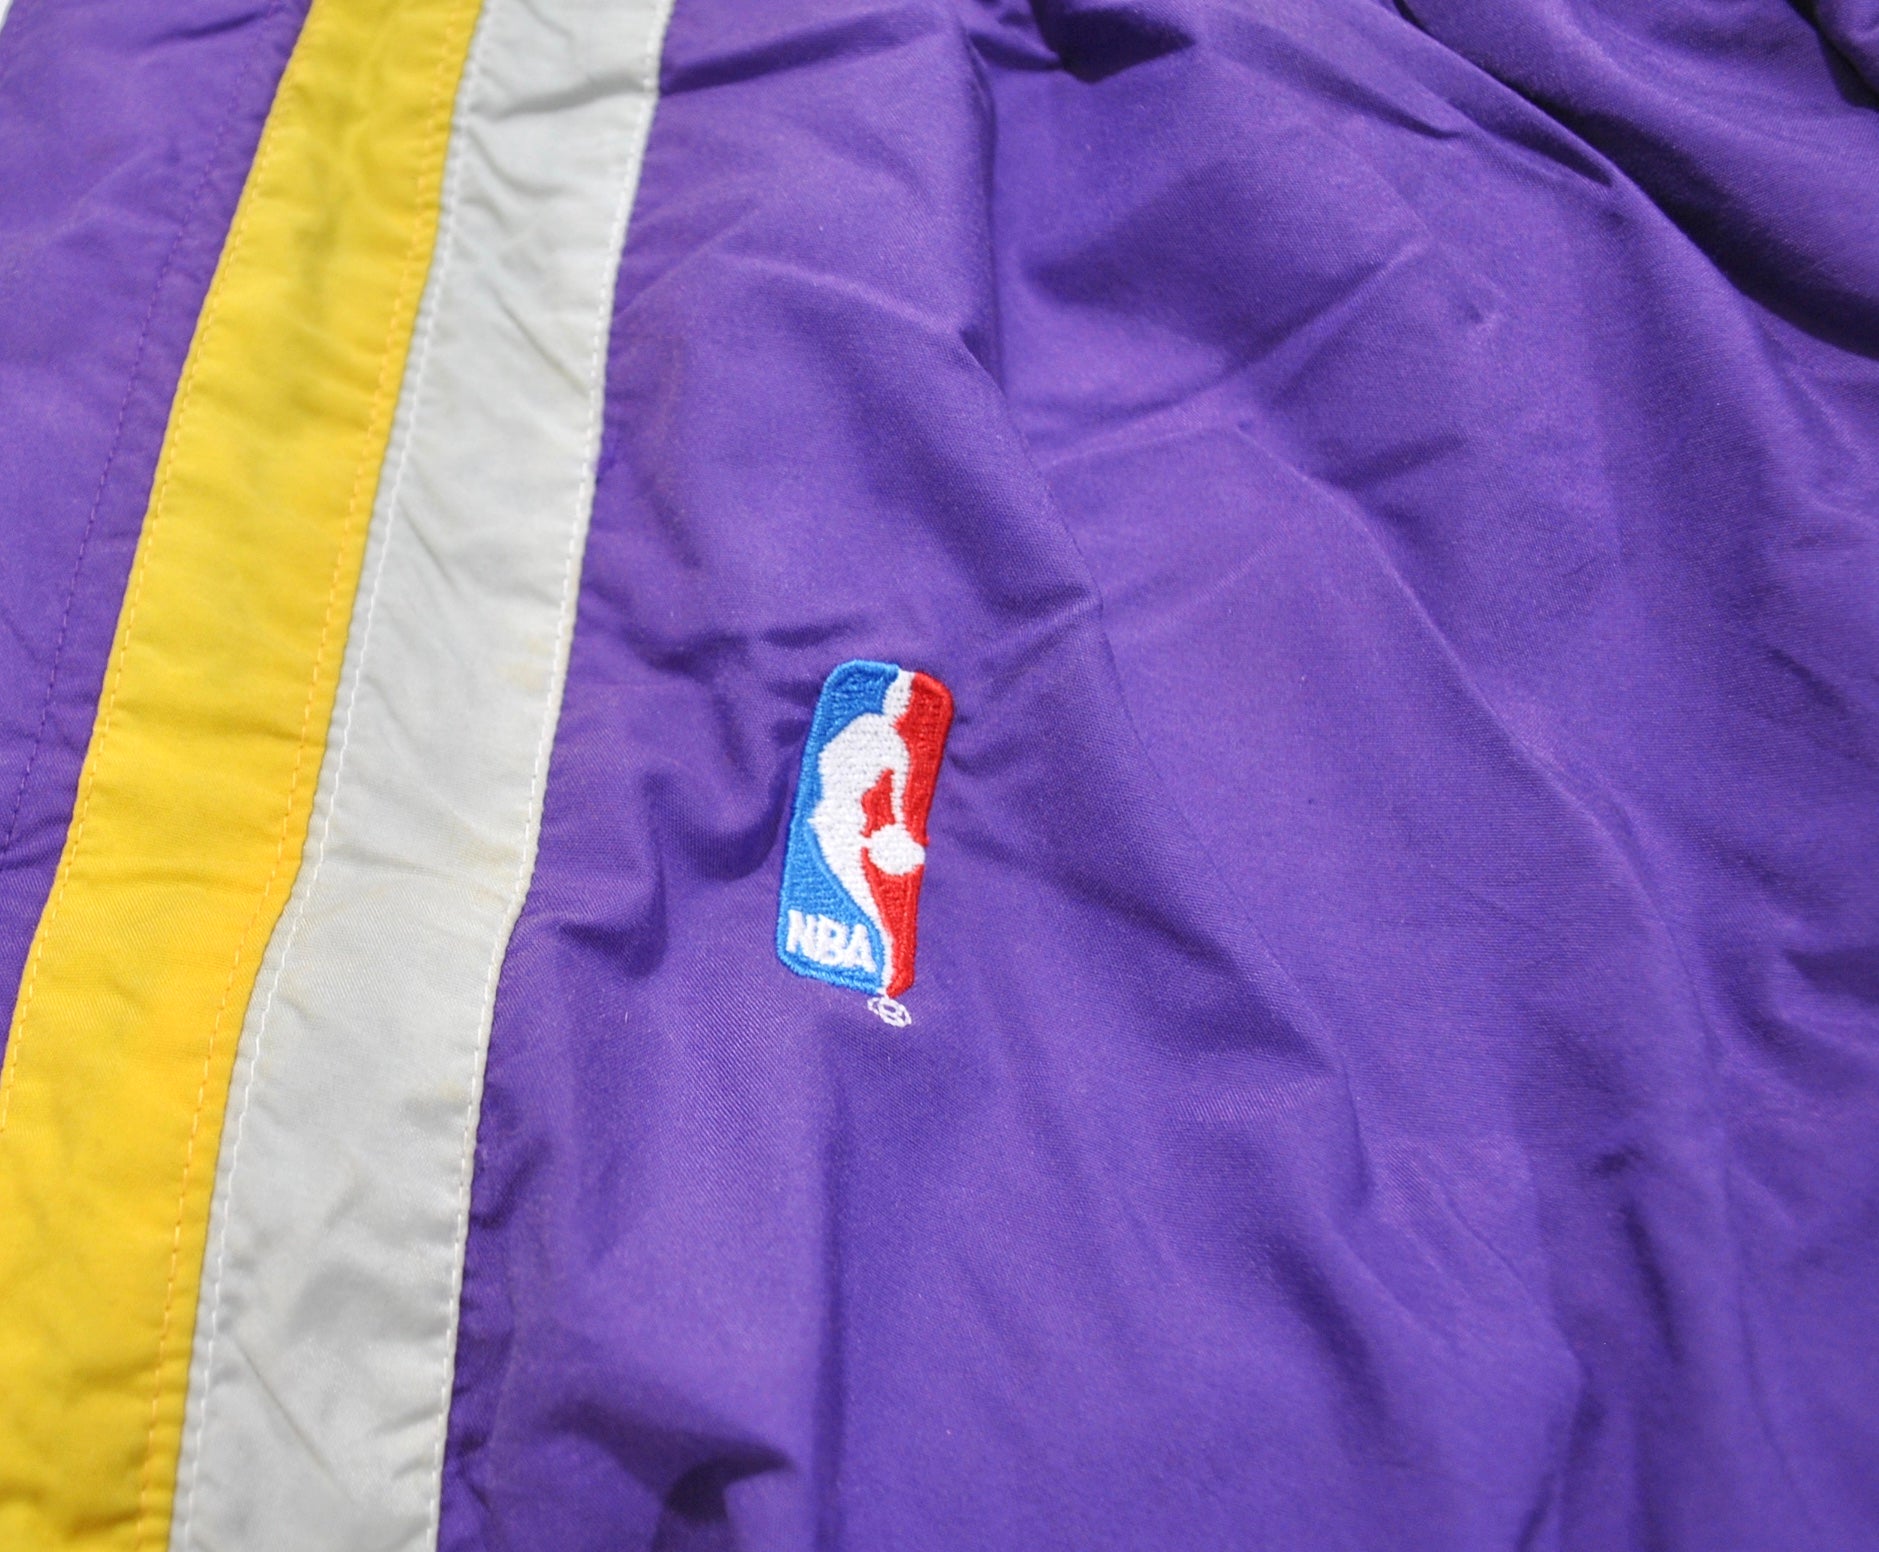 Vintage 1990s Champion Los Angeles Lakers NBA Bomber Jacket / Athleisure Sportswear / Streetwear Fashion / Vintage Champion / 90s NBA